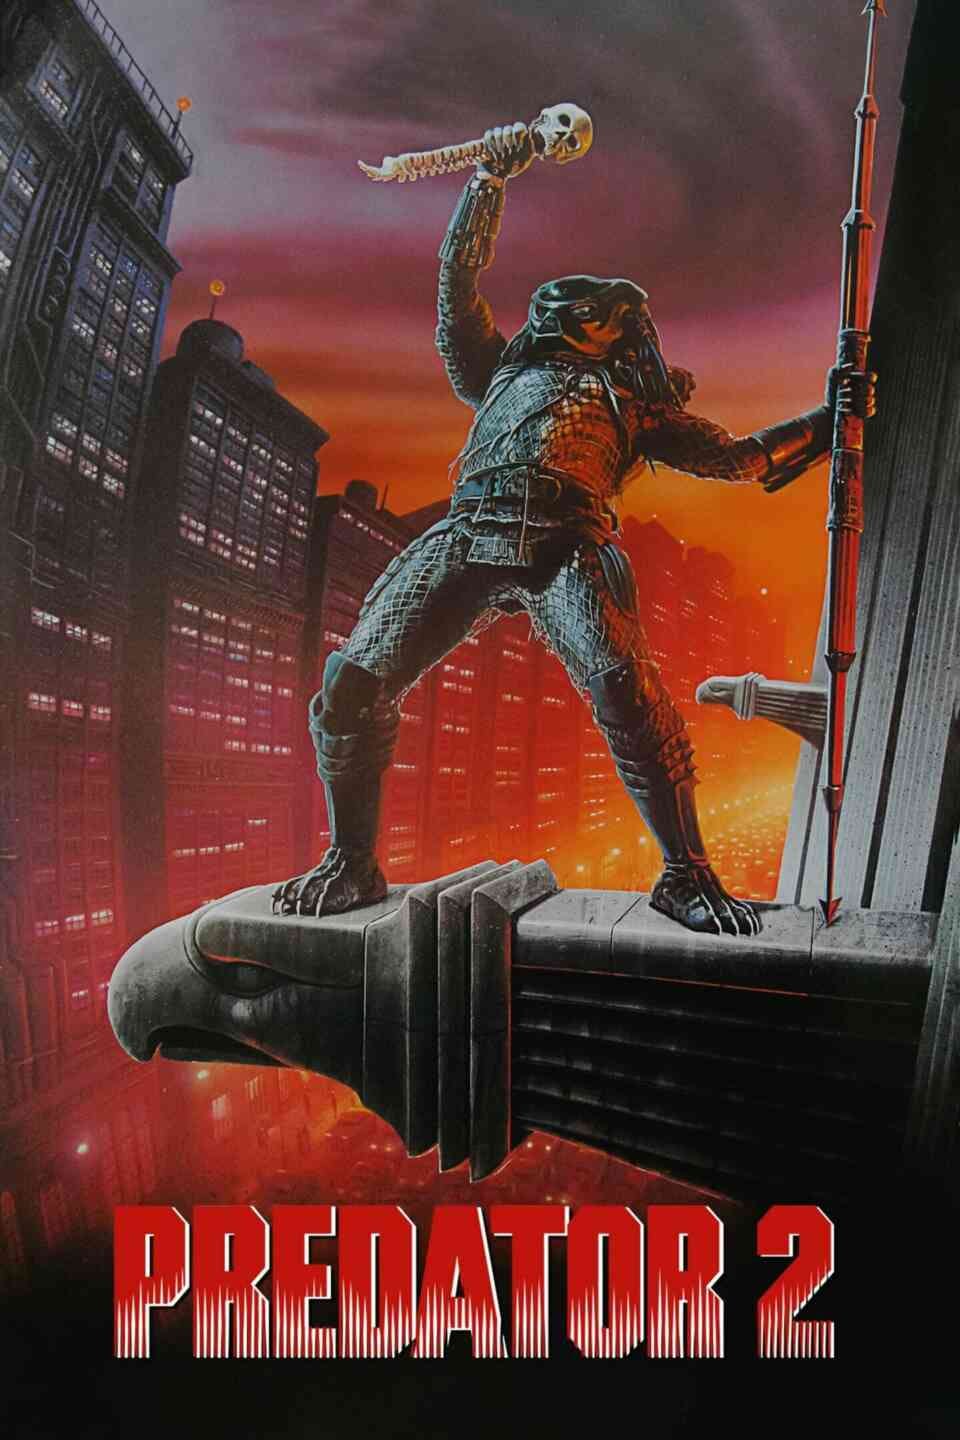 Read Predator 2 screenplay (poster)